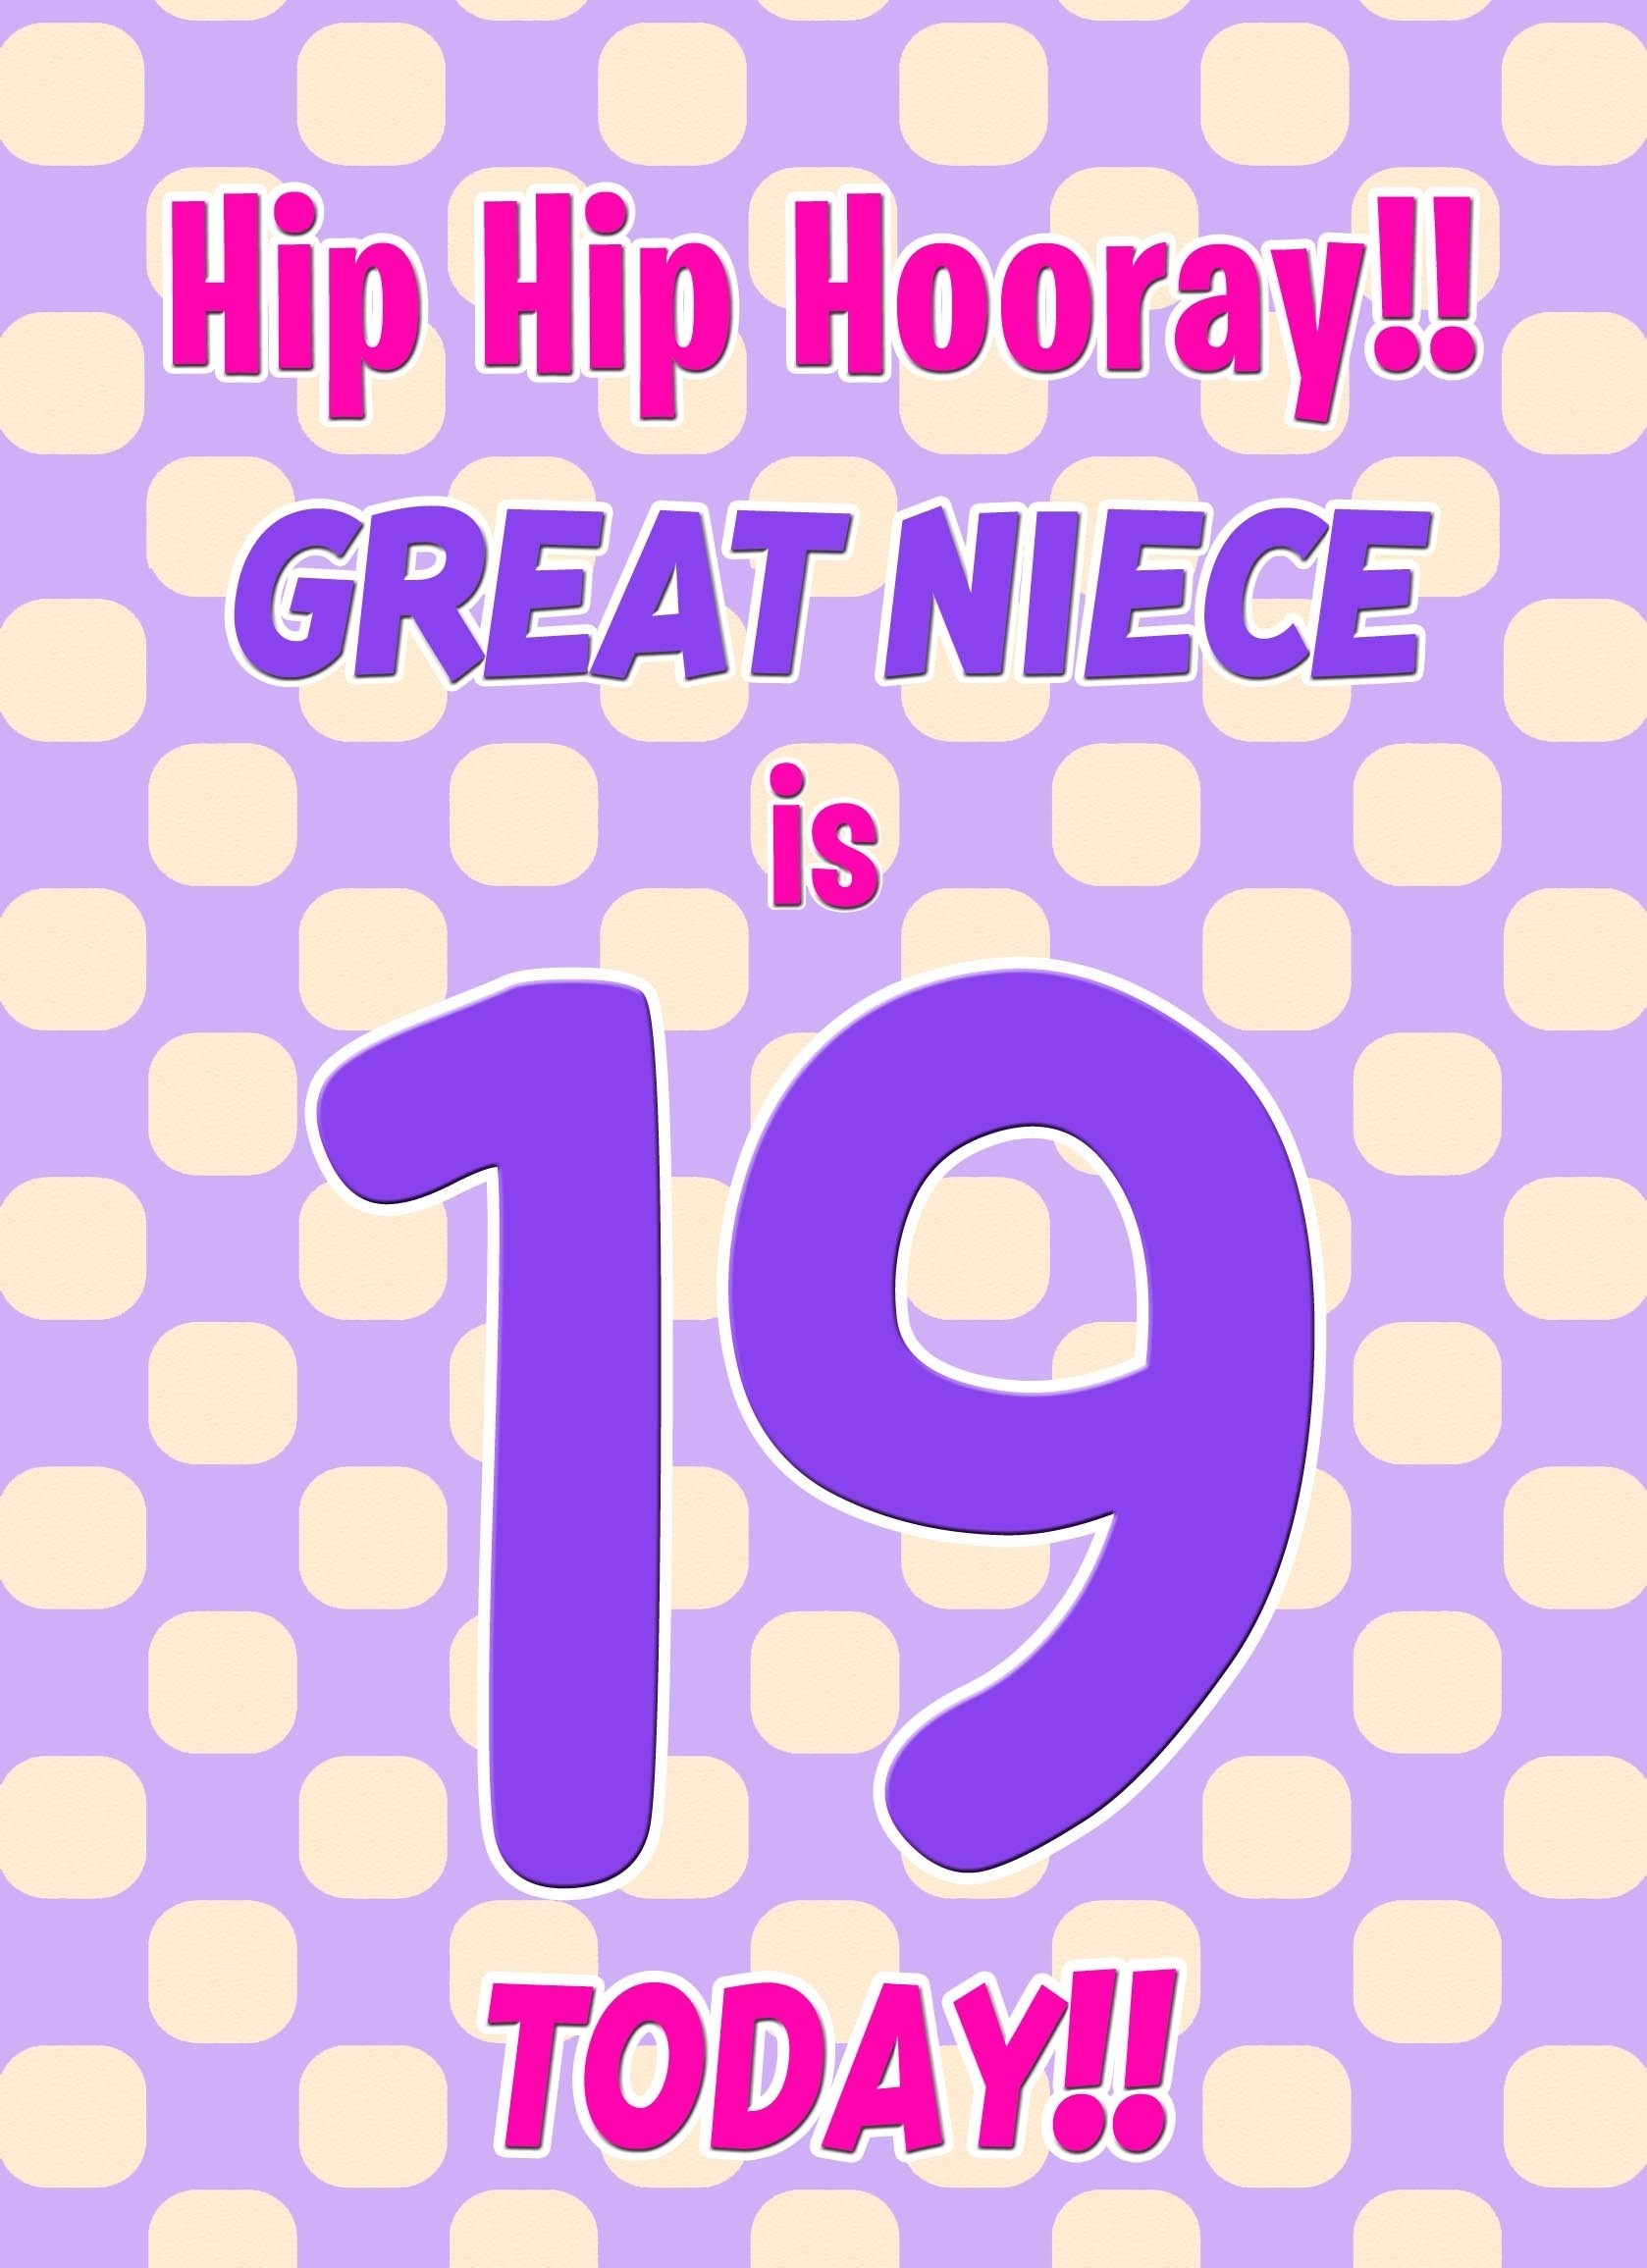 Great Niece 19th Birthday Card (Purple Spots)